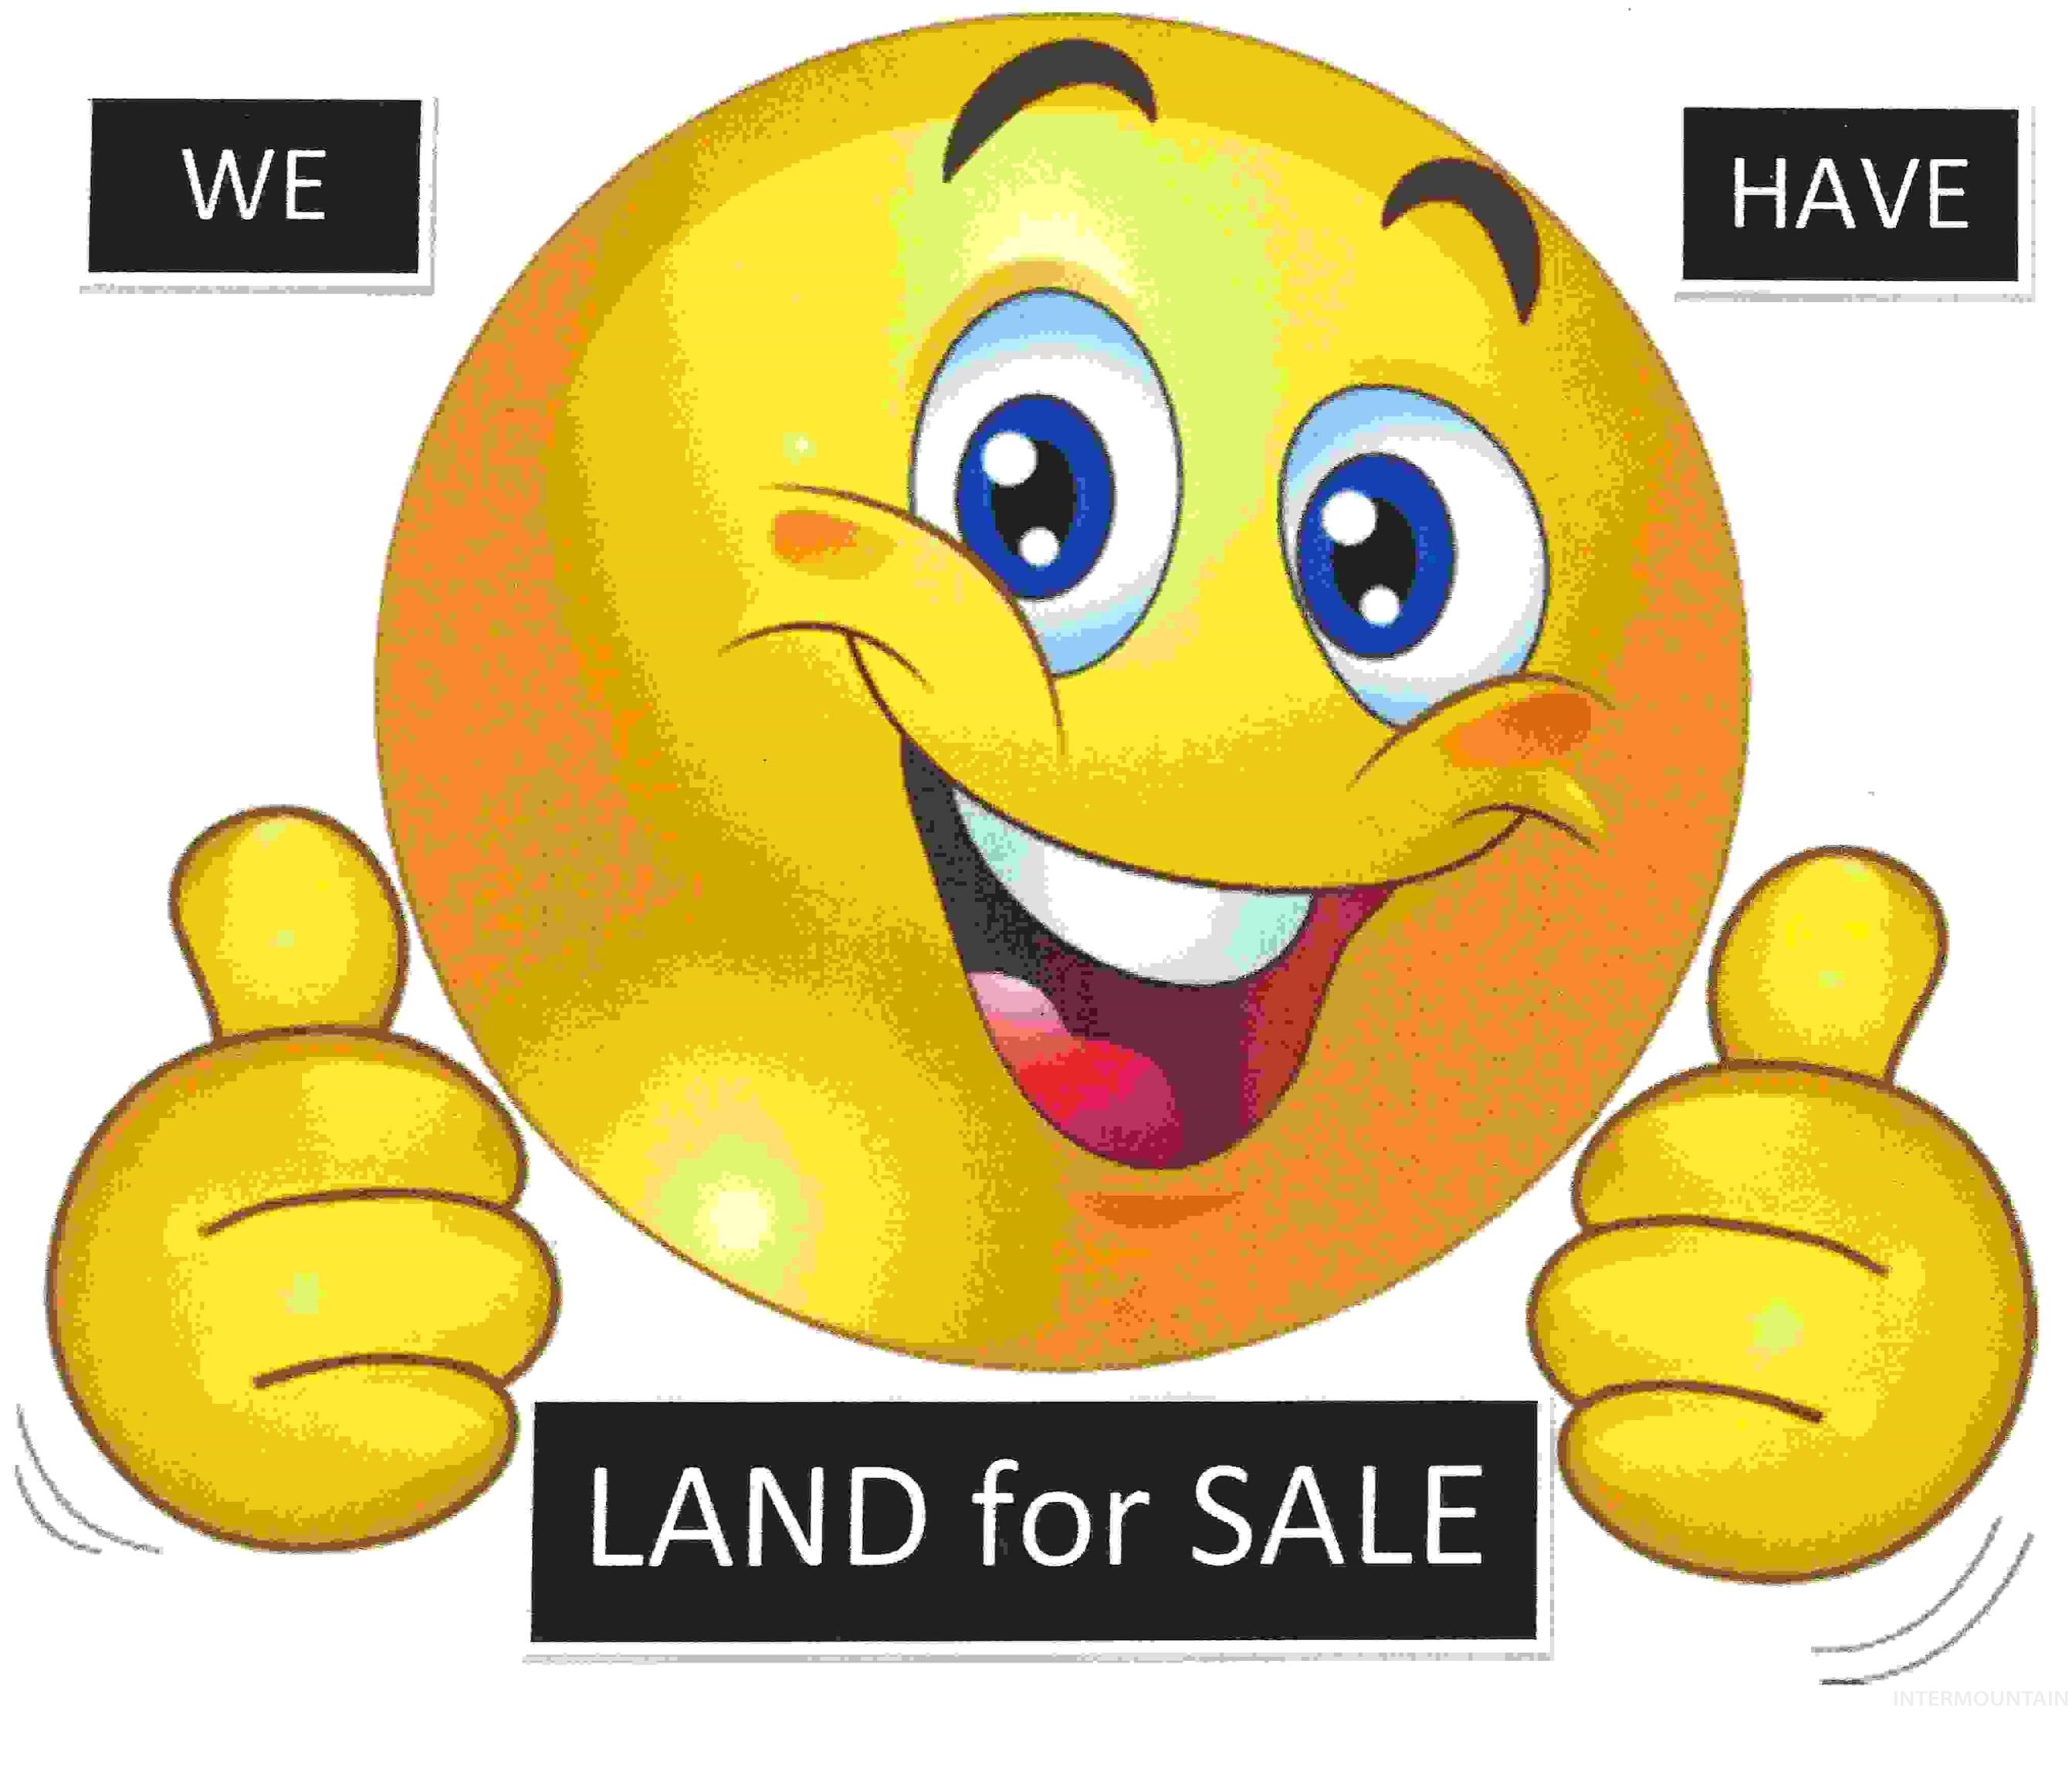 TBD Lot 12, Block 6 on Elm Street, Vale, Idaho 97918, Land For Sale, Price $30,000,MLS 98903854